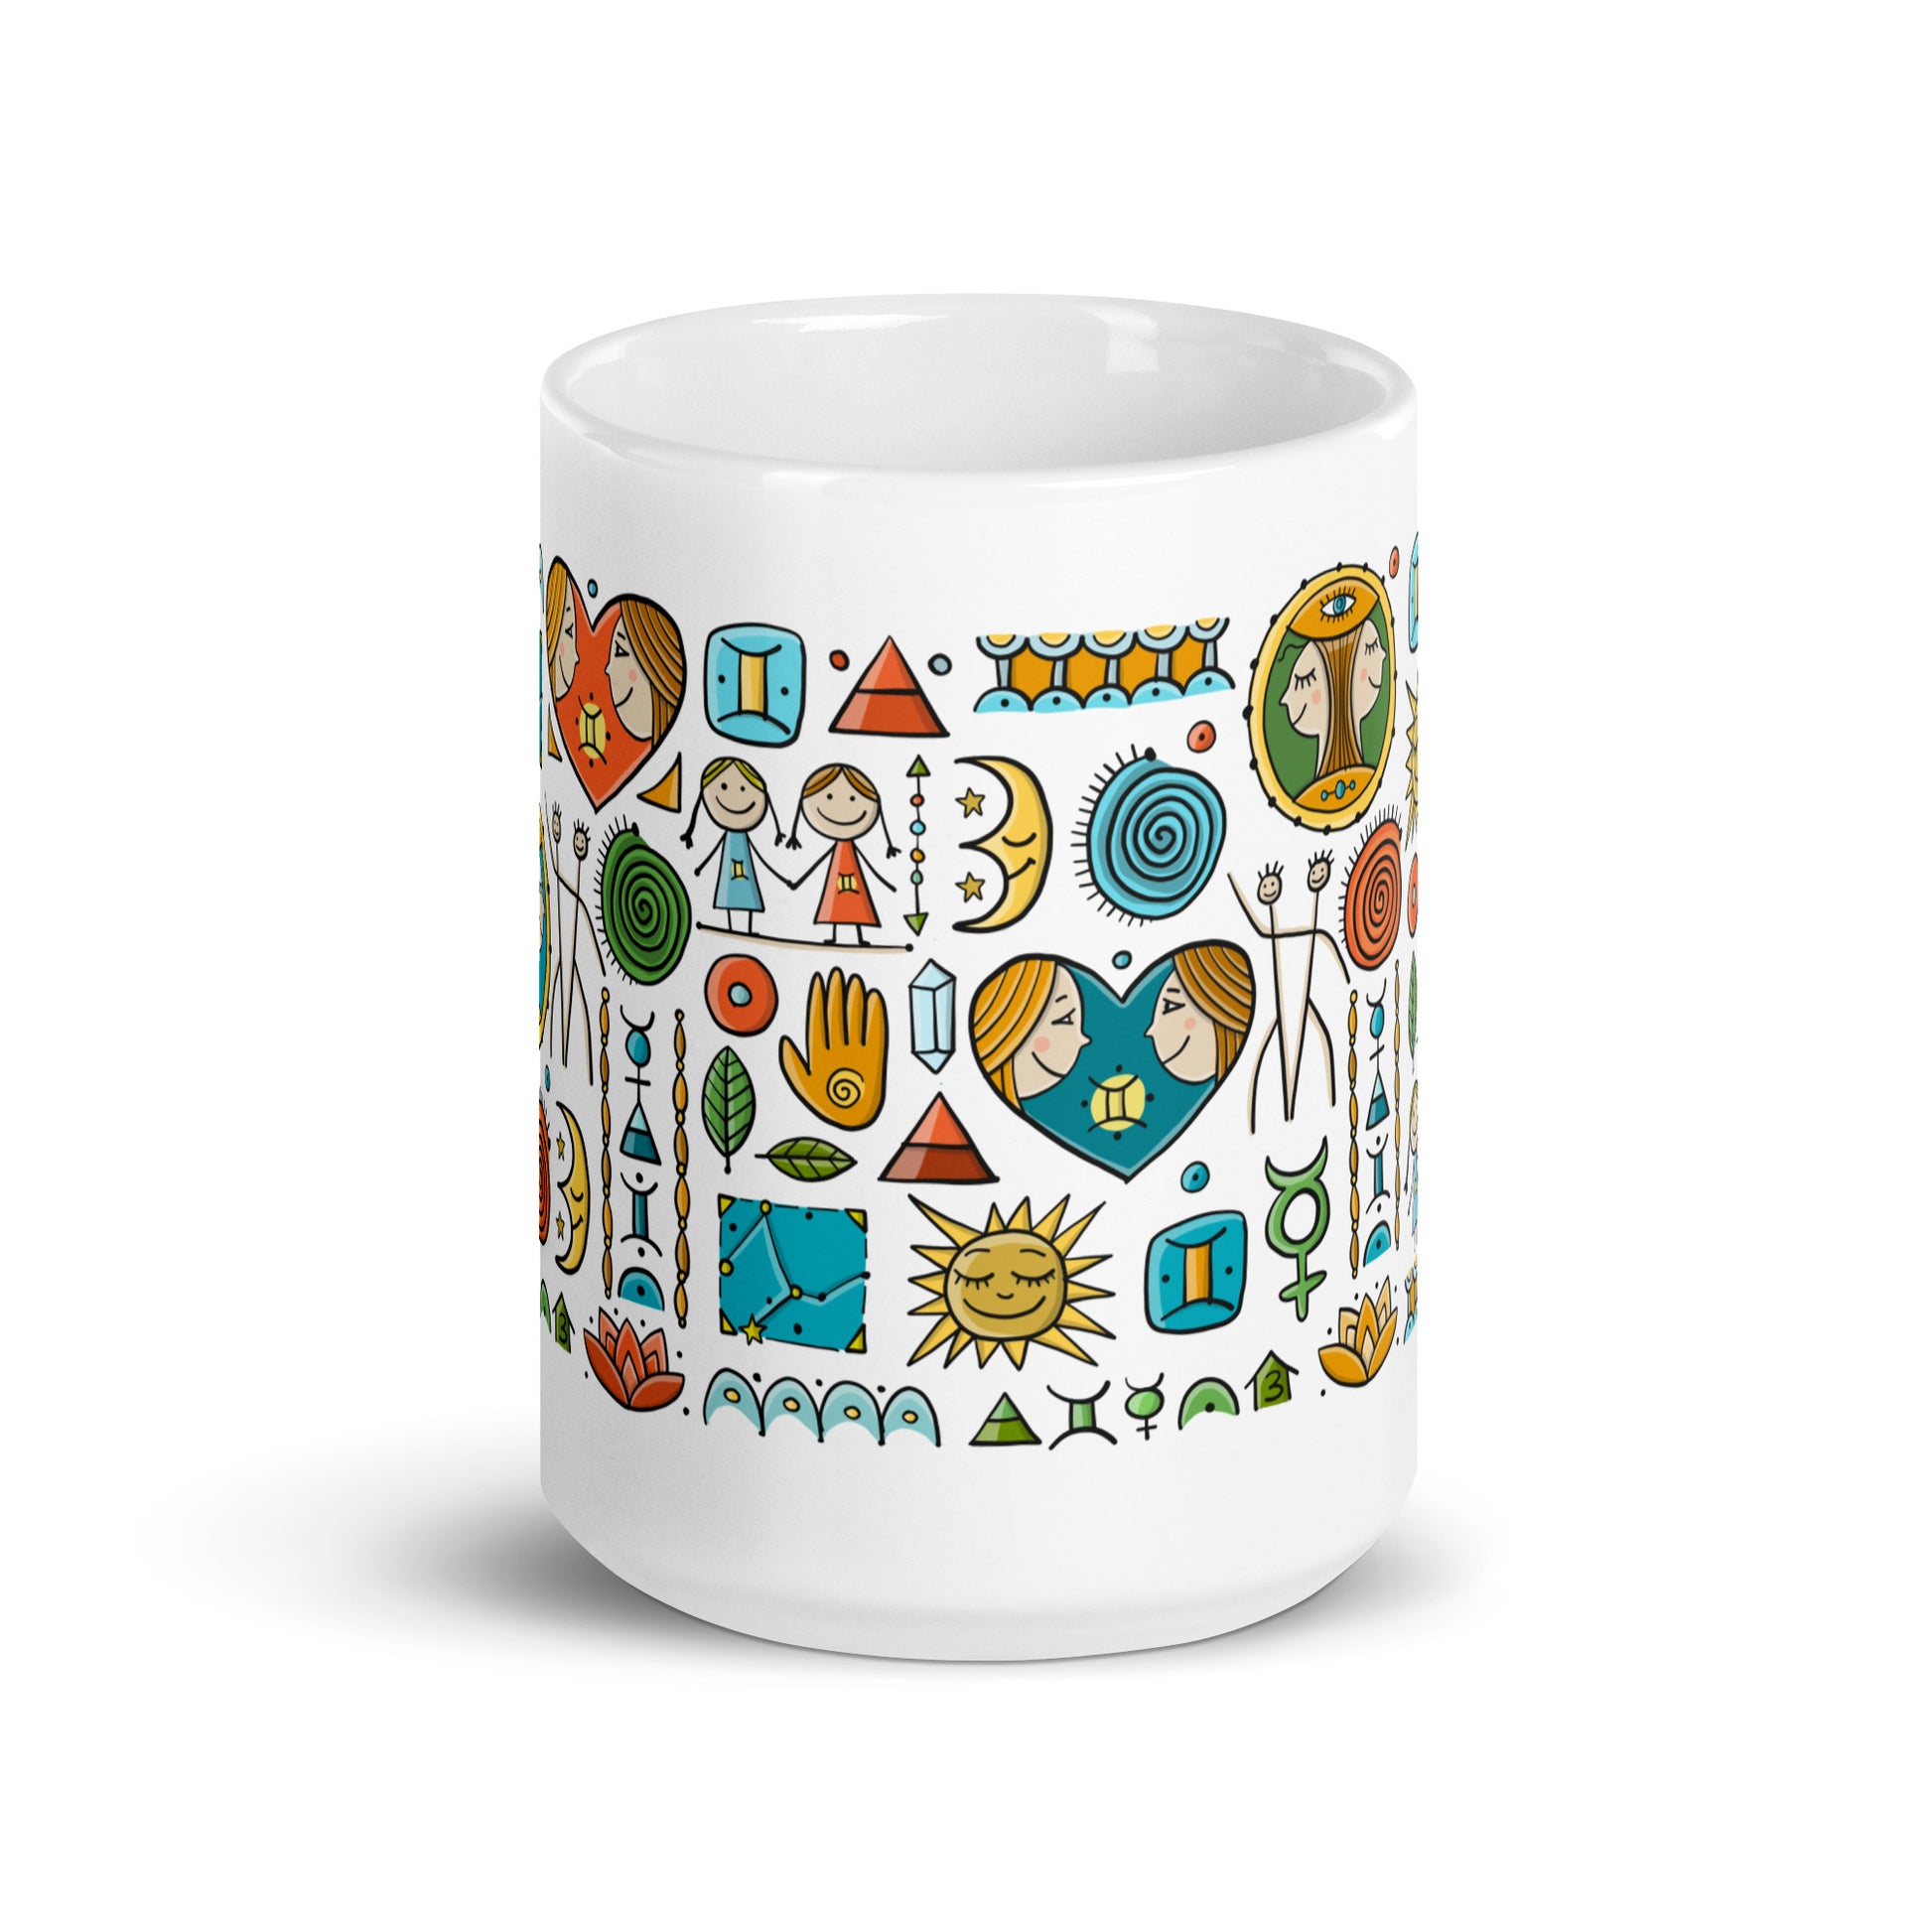 Gemini Zodiac Mug 15 oz: A white ceramic mug featuring a Gemini zodiac symbol design for astrology enthusiasts. Great gift idea for Gemini.